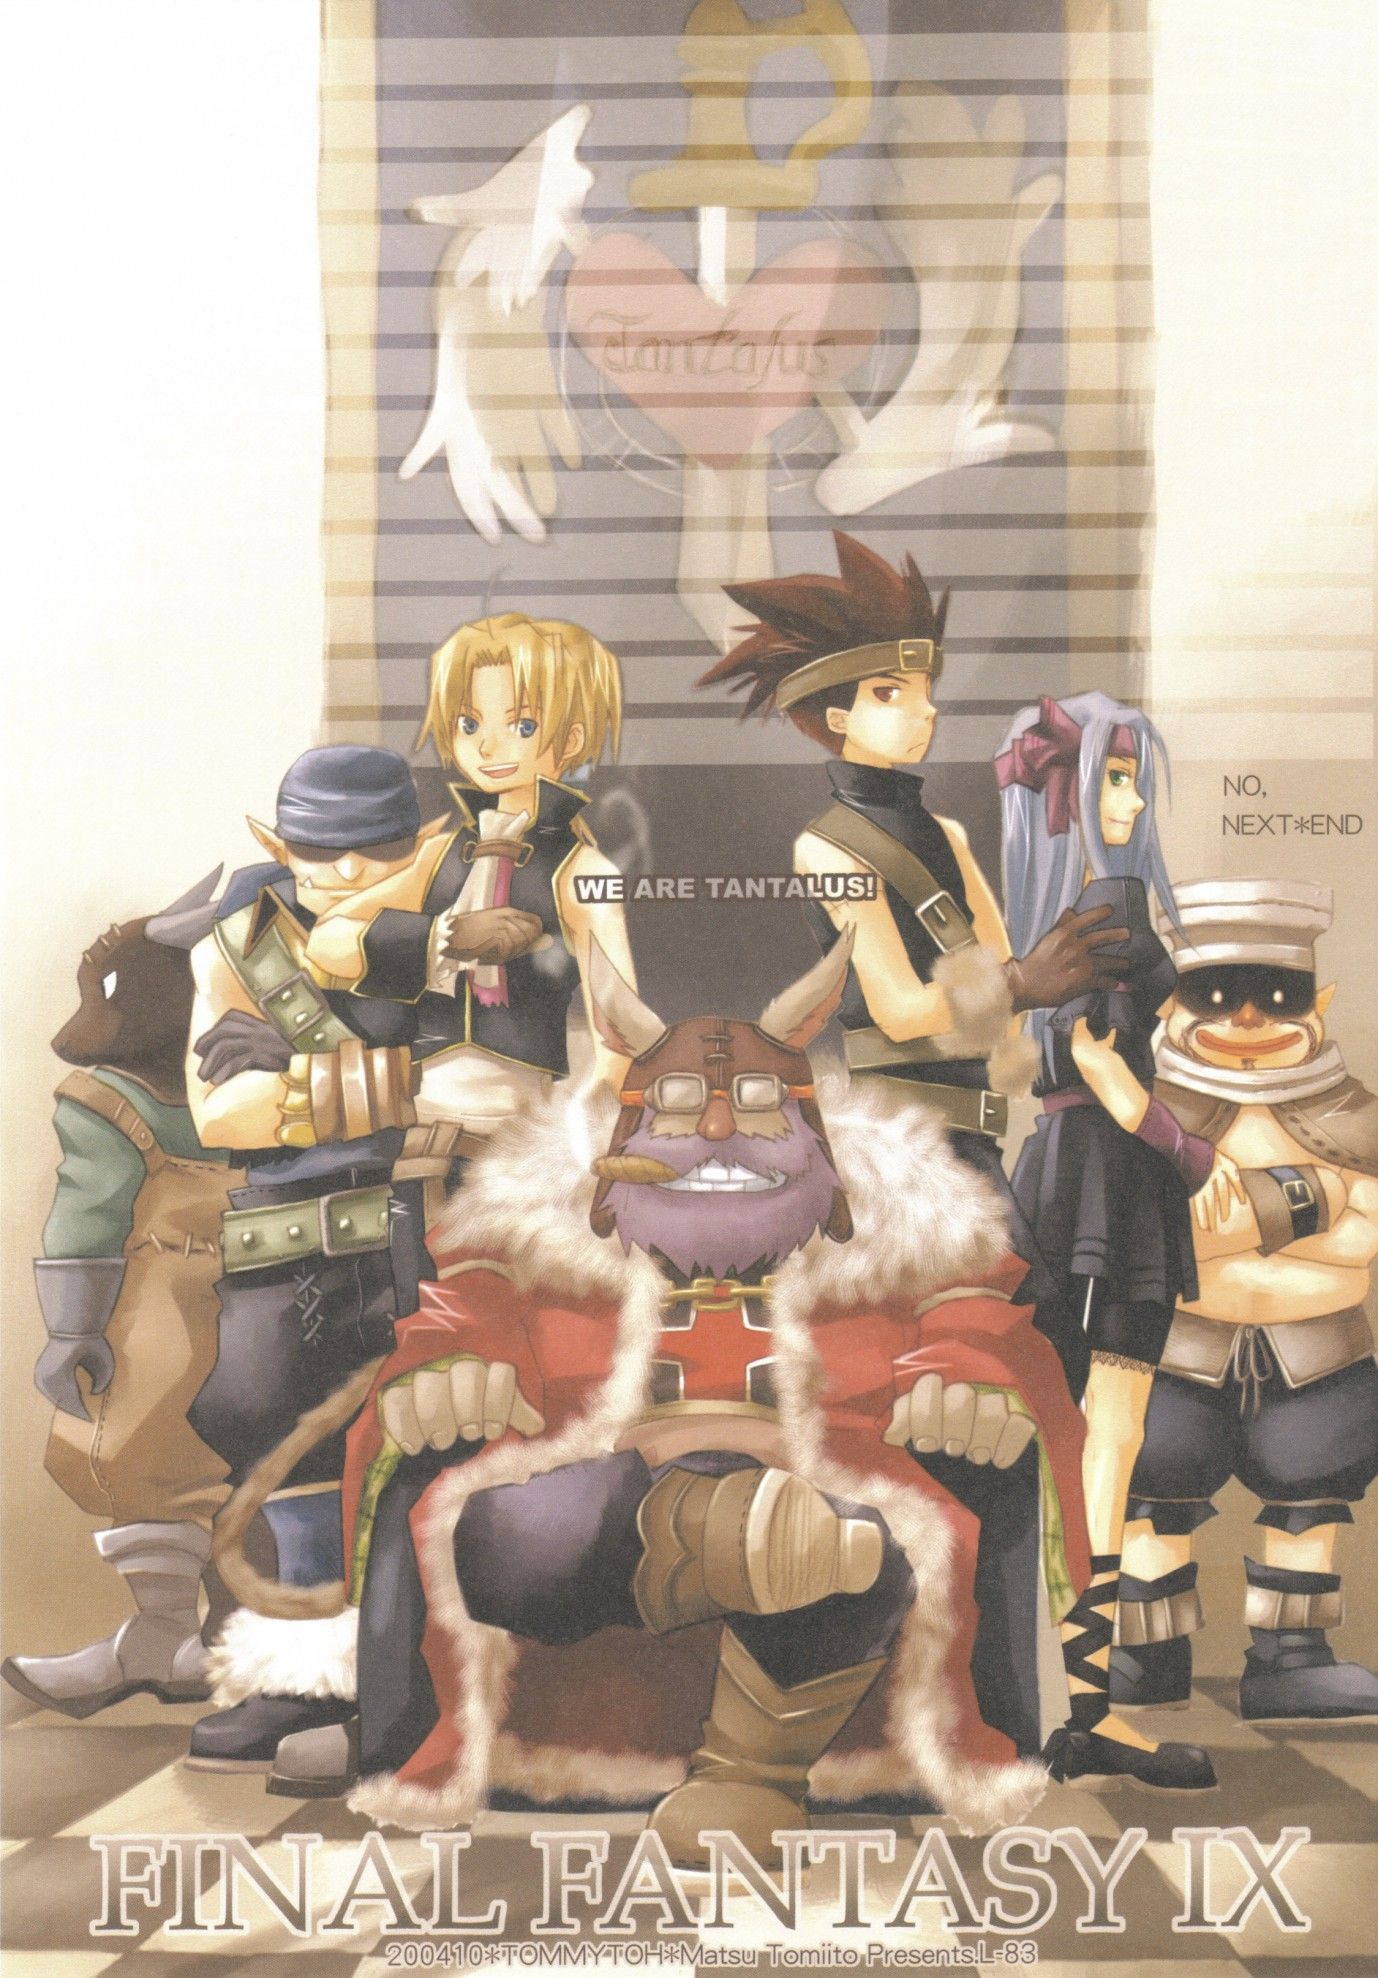 Final Fantasy IX Image Anime Image Board